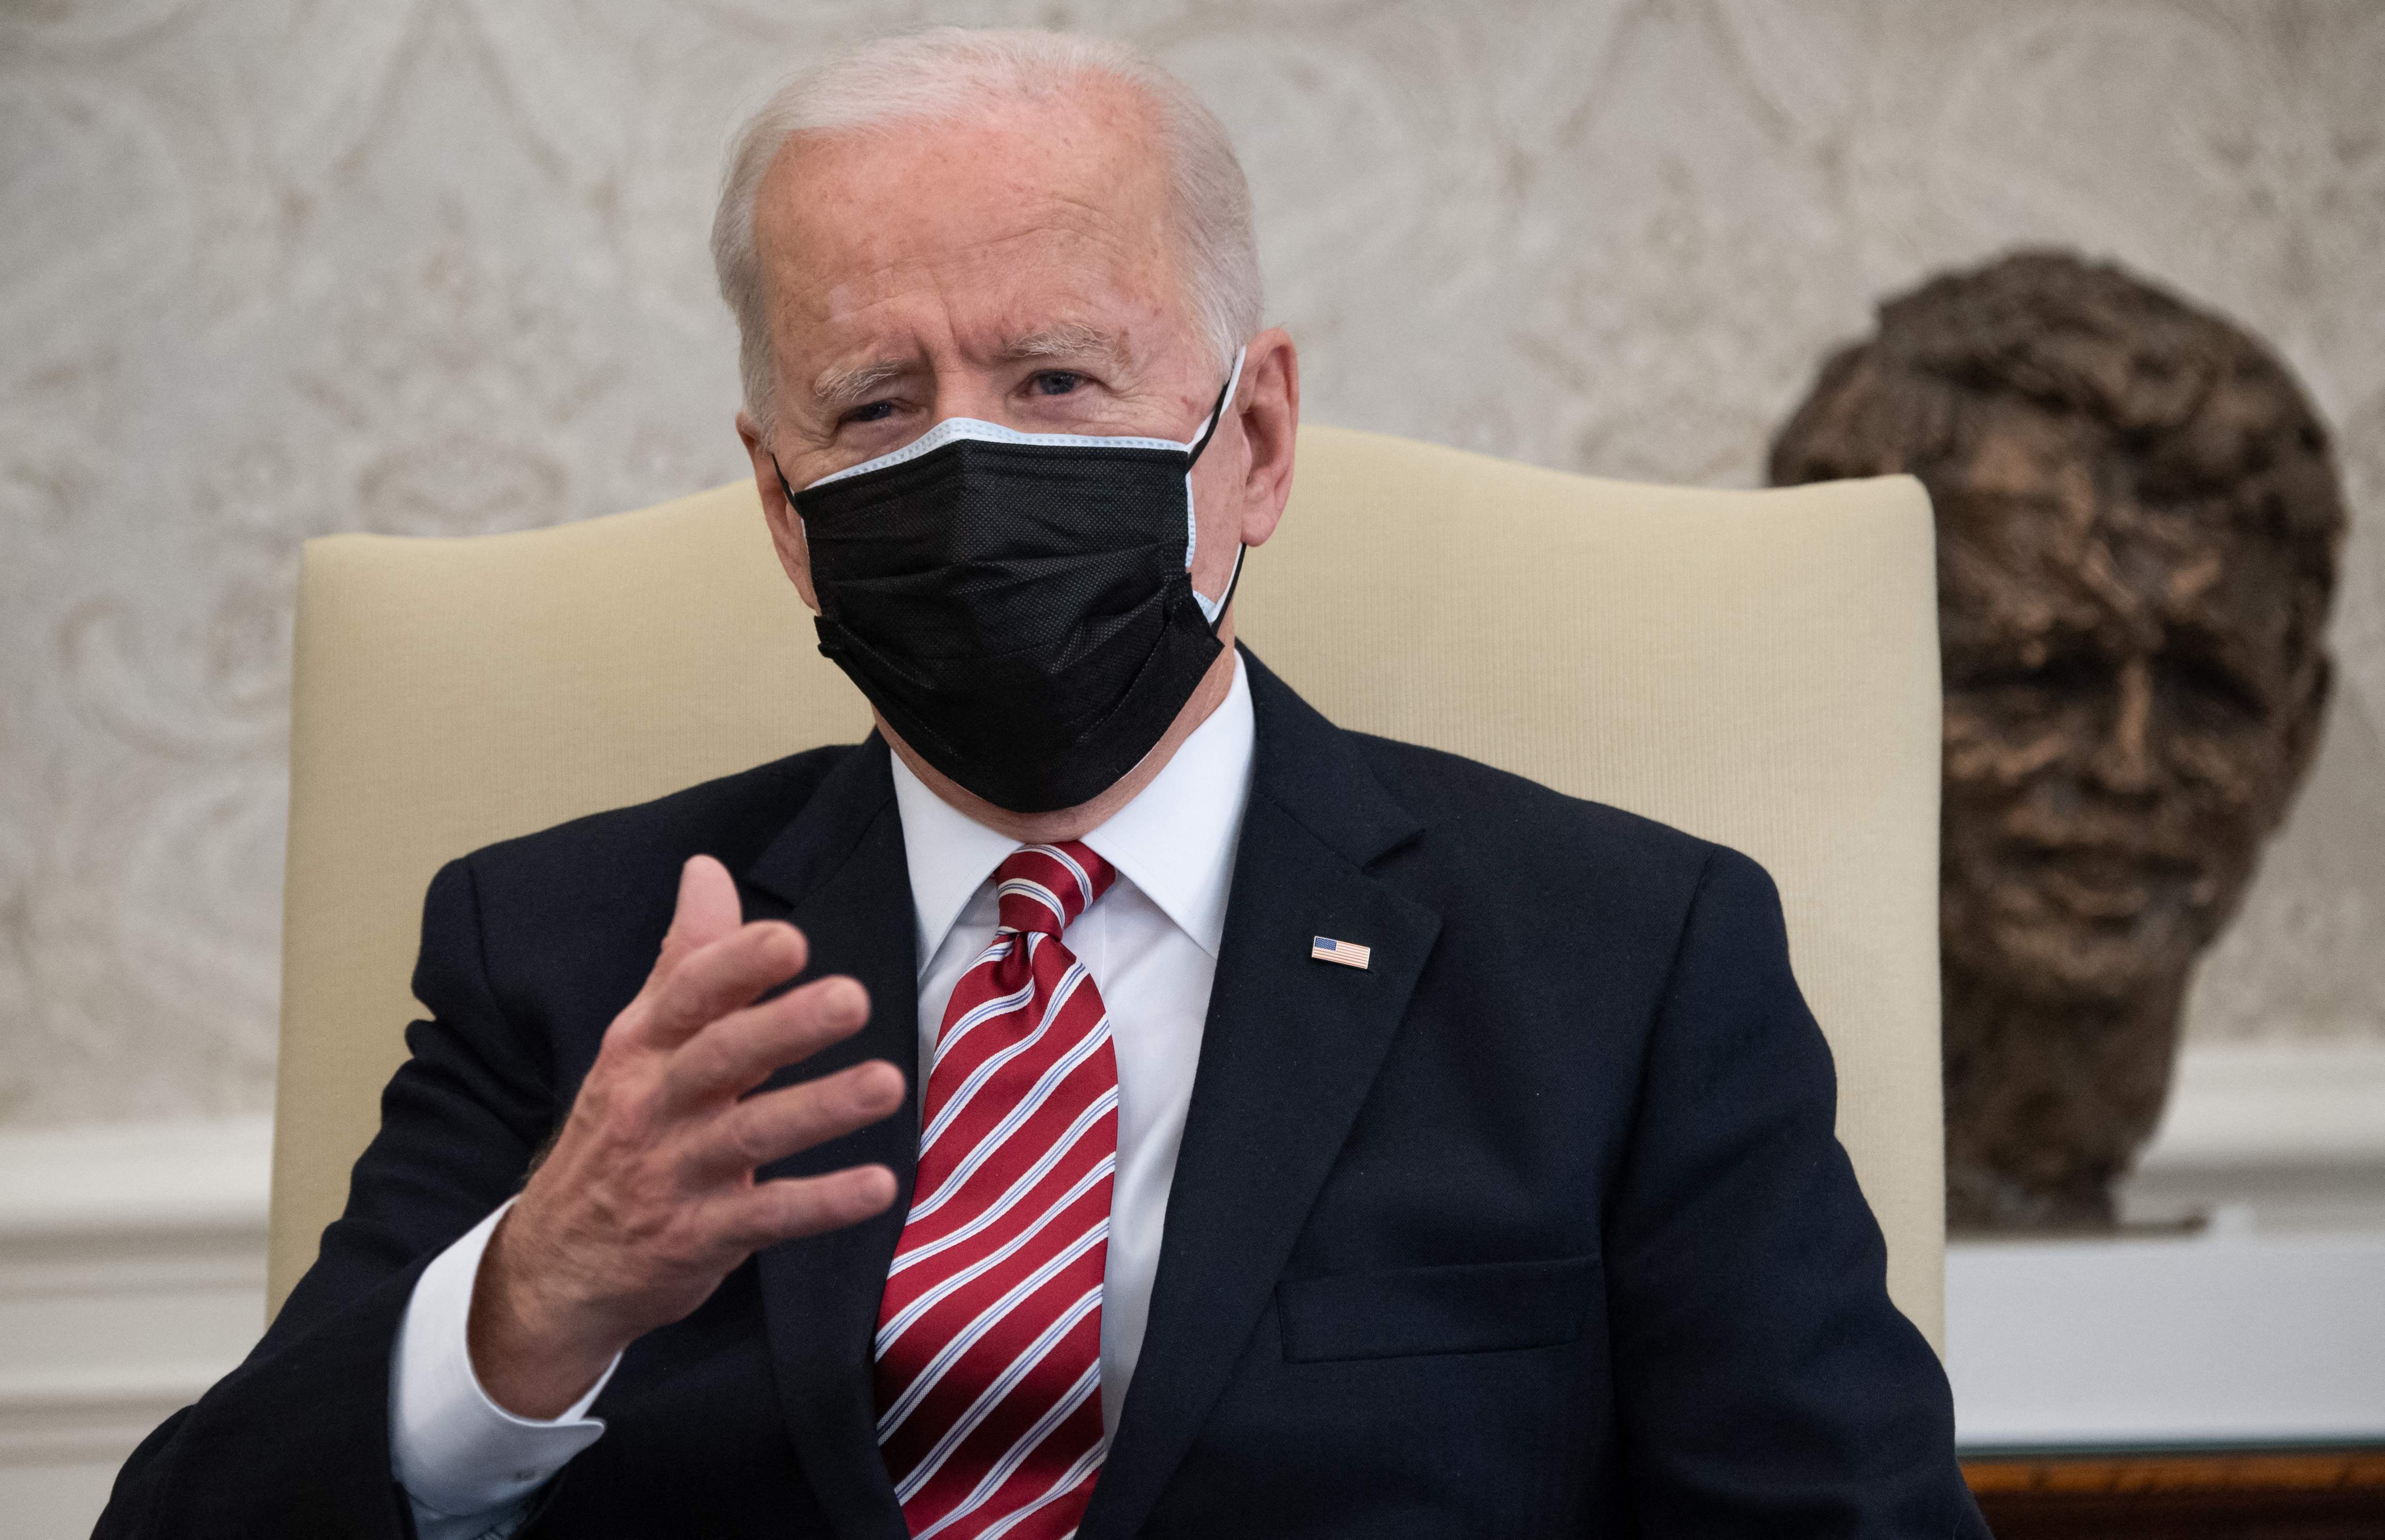 Joe Biden potentially faces the first major international crisis of his presidency